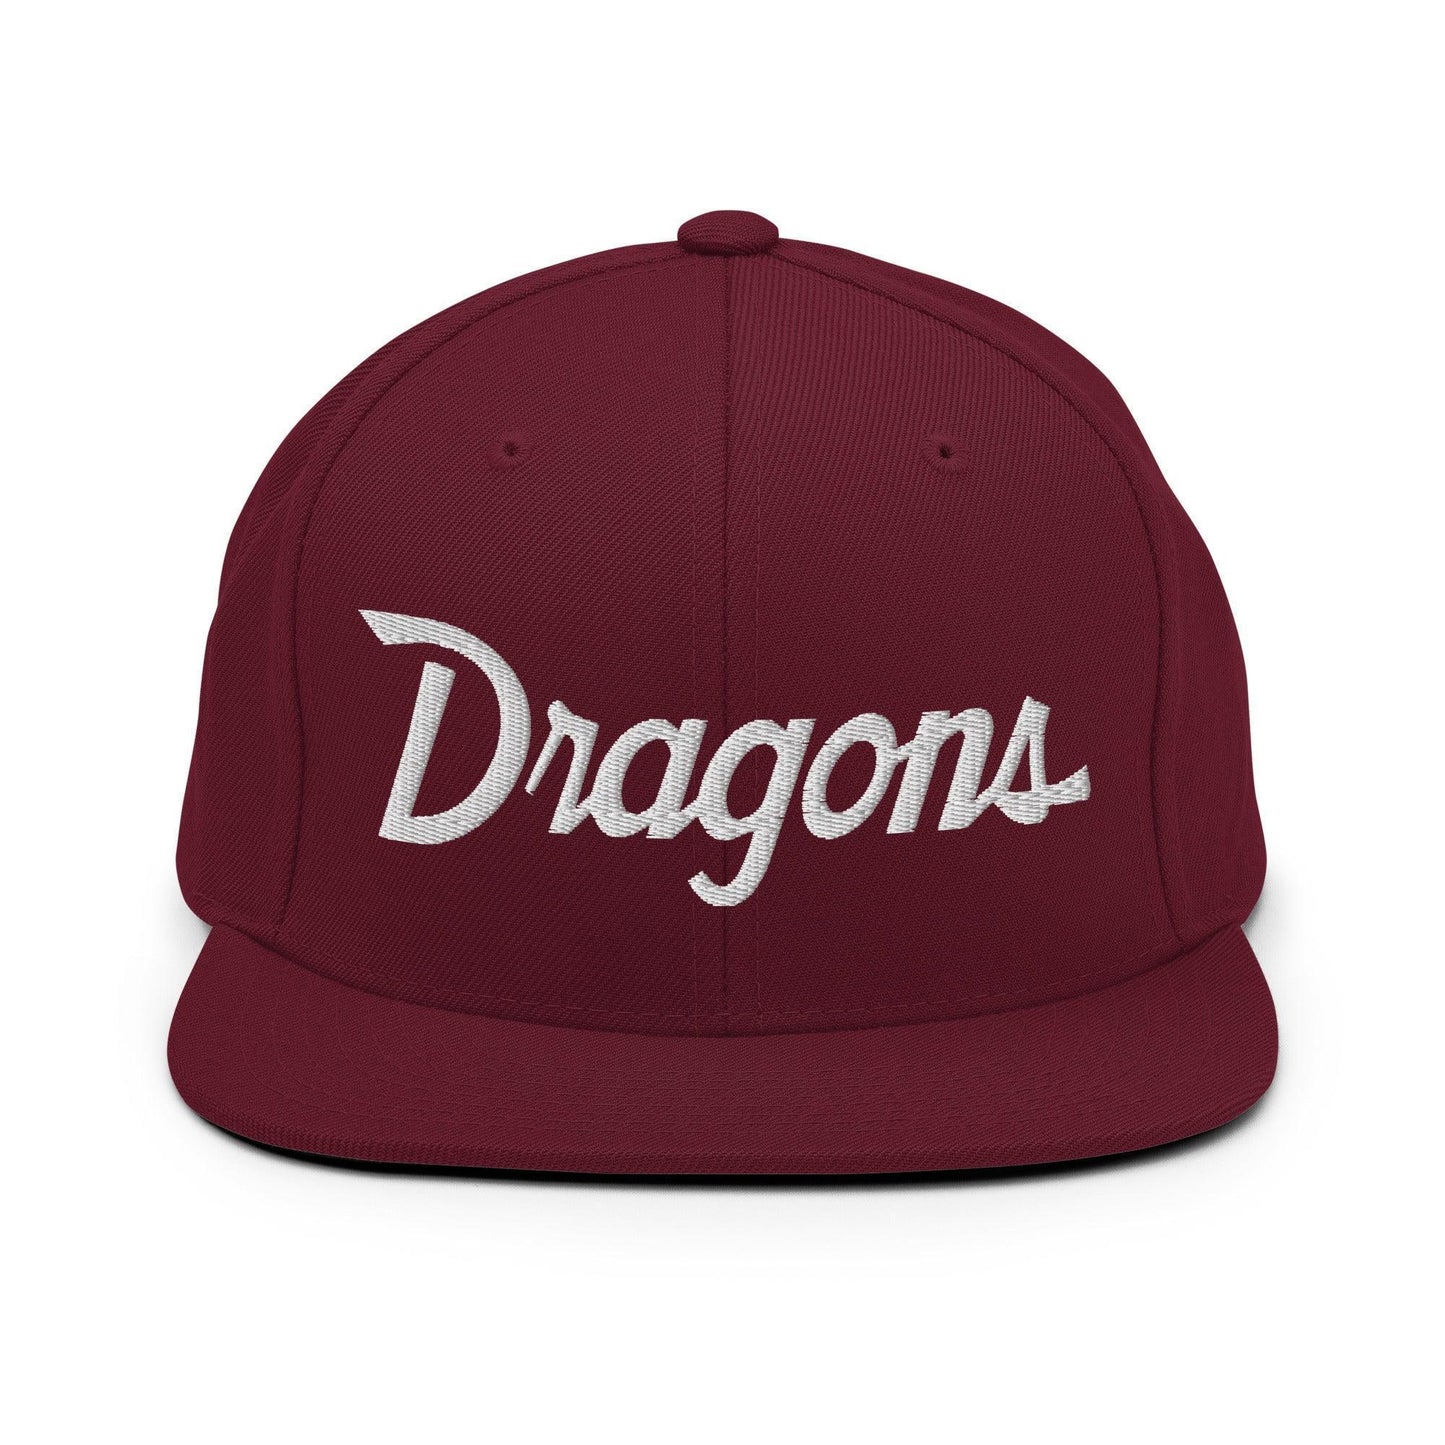 Dragons School Mascot Snapback Hat Maroon